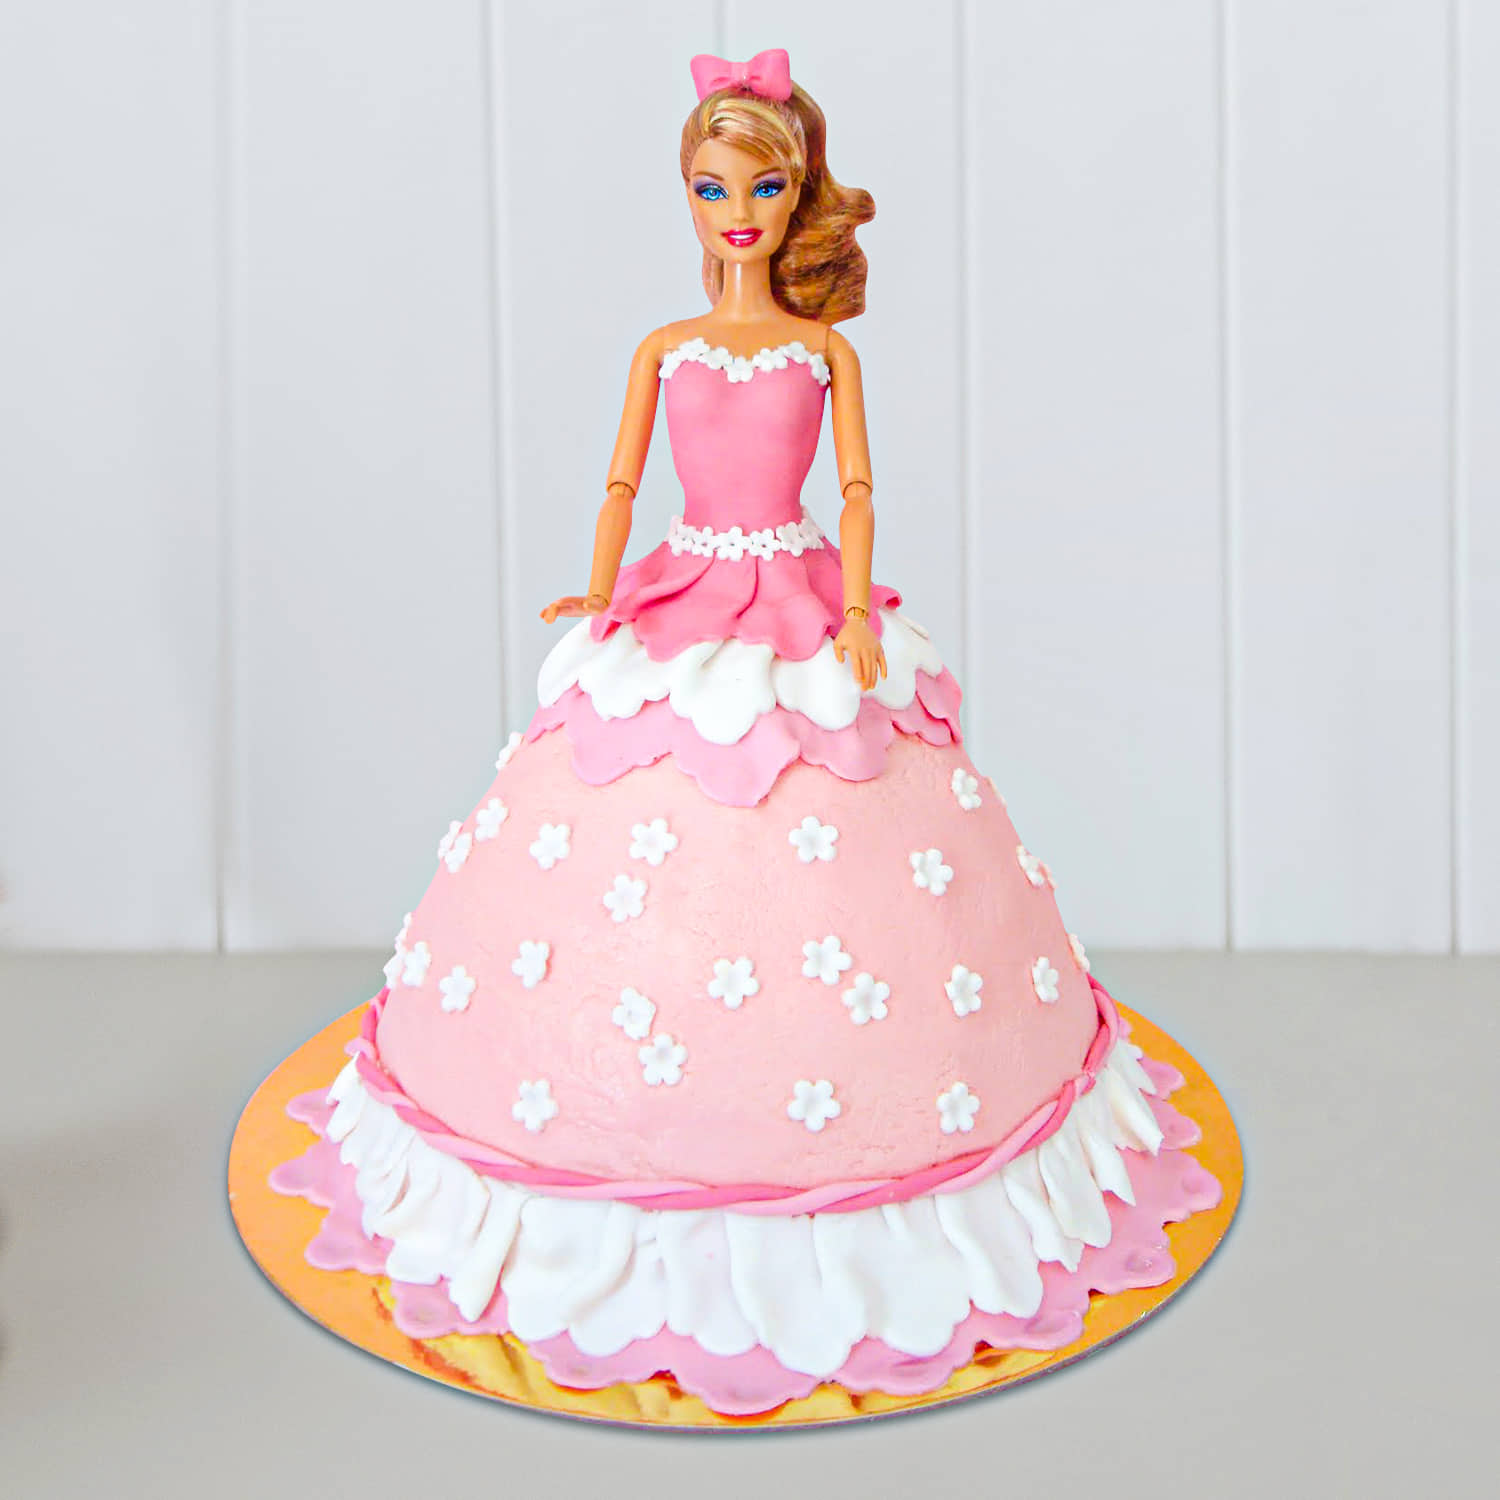 Pink Barbie Cake Delivery in Delhi NCR - ₹1,499.00 Cake Express